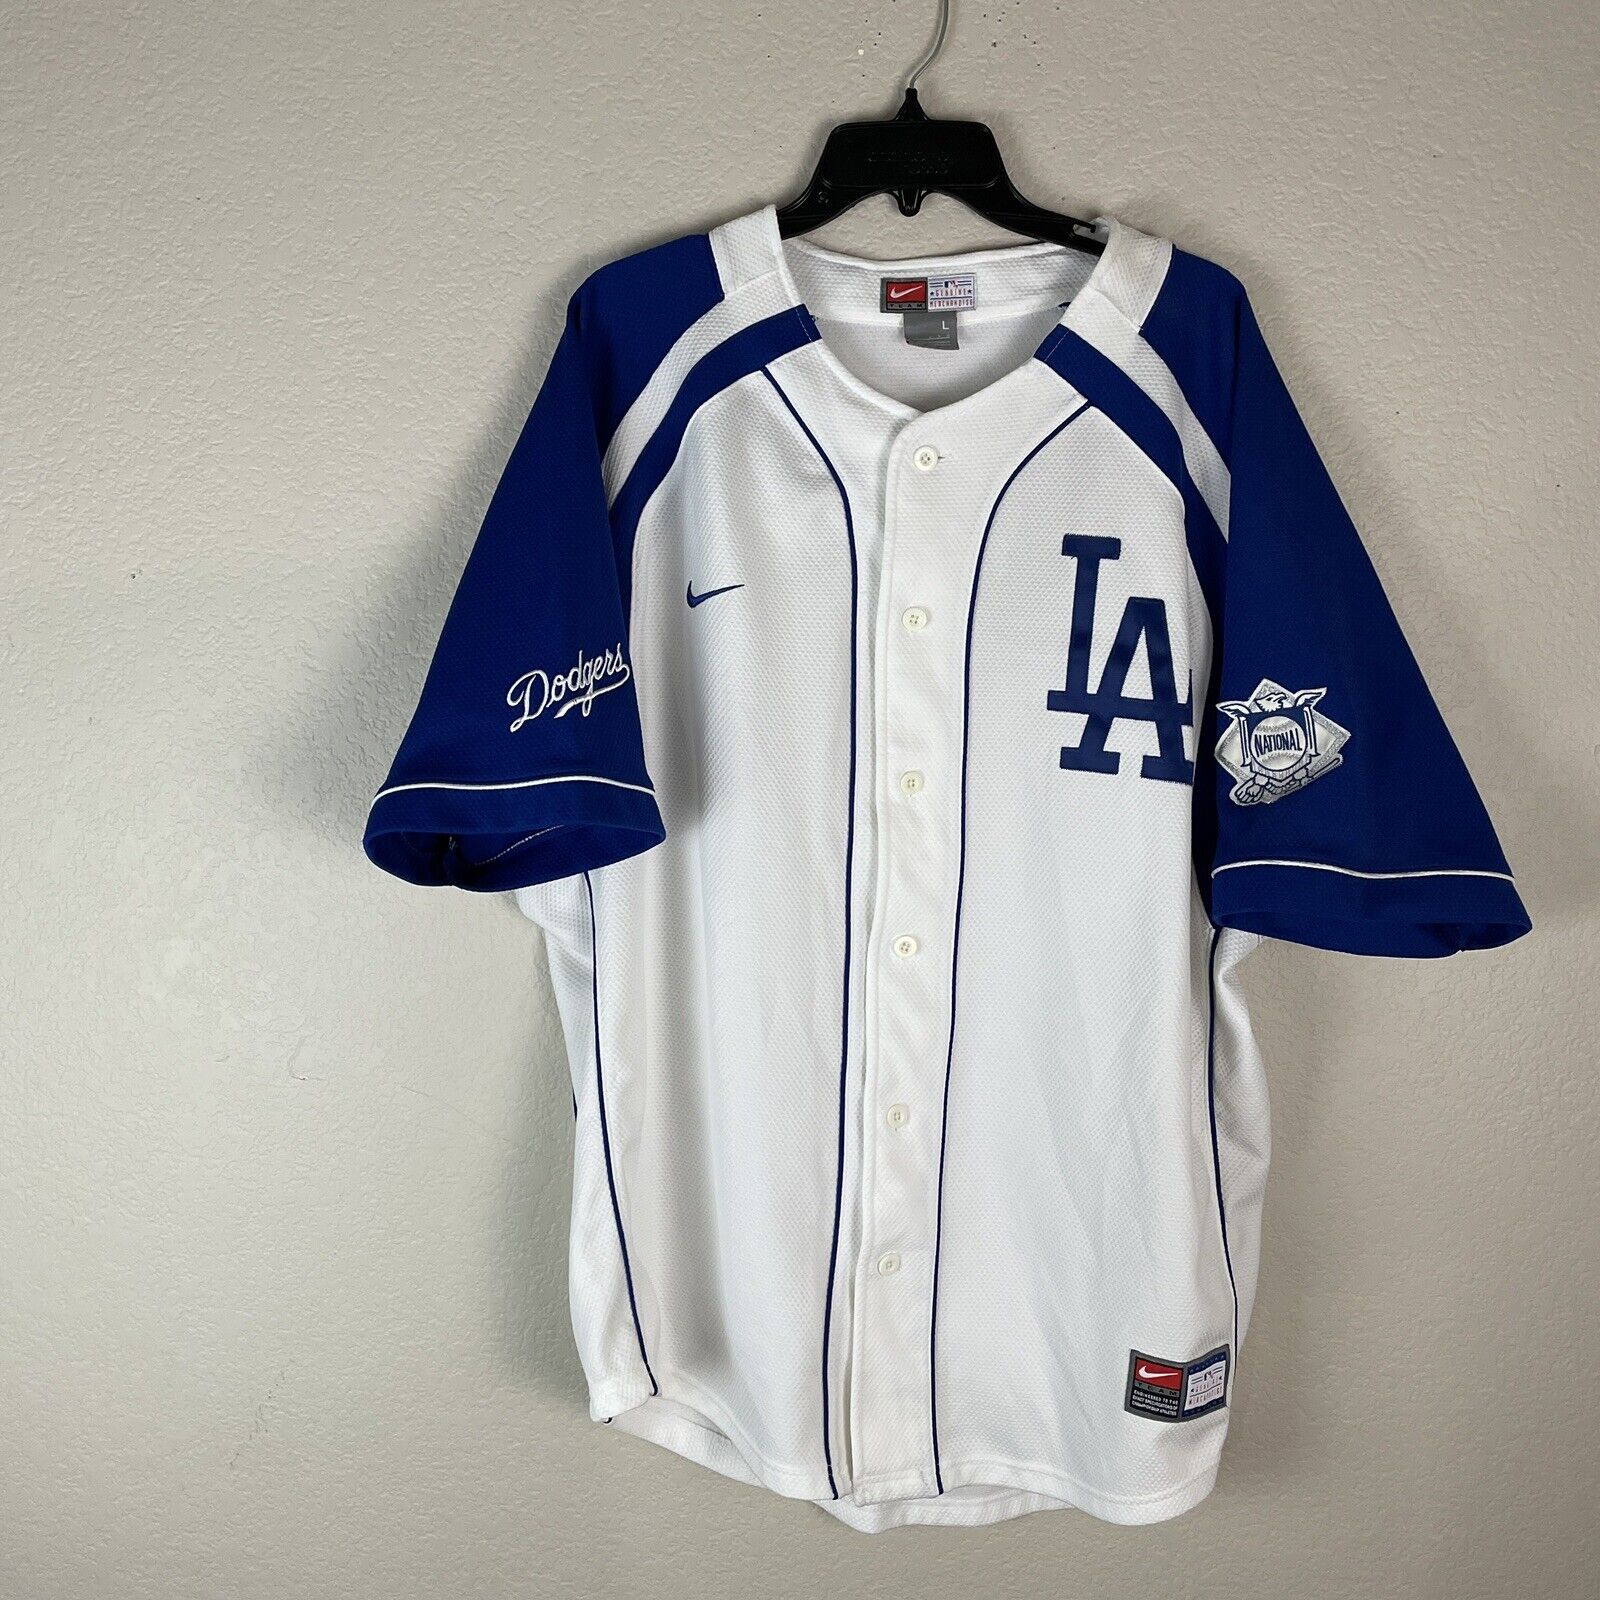 Vintage Nike Los Angeles Dodgers Jersey Size Large